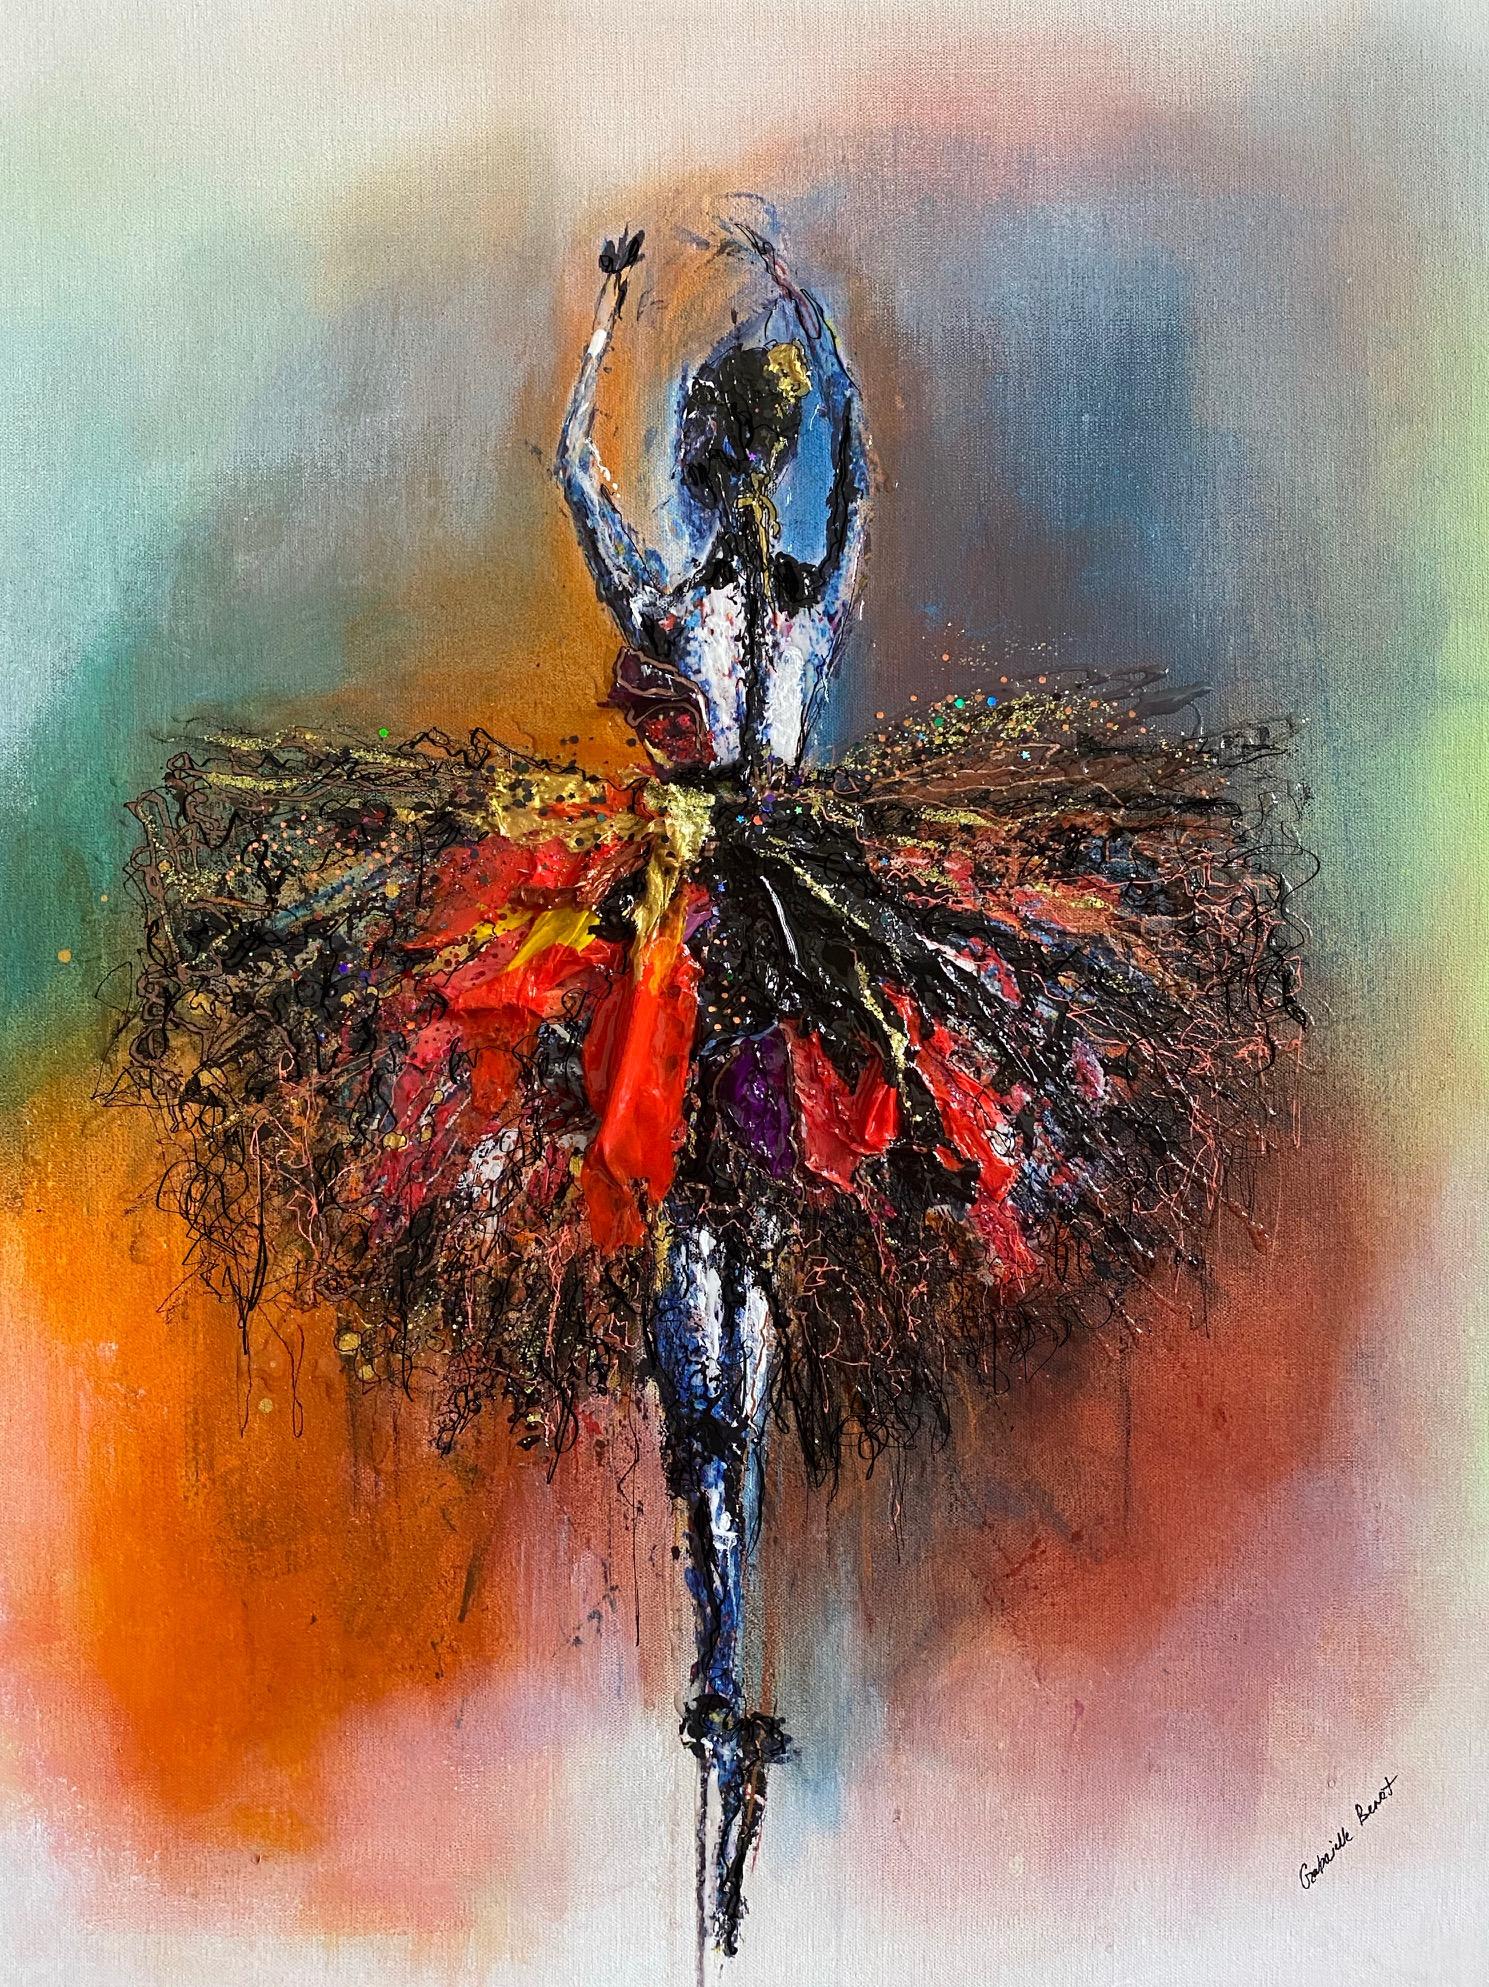 Gabrielle Benot, "Black Swan", Contemporary Ballet Mixed Media on Canvas